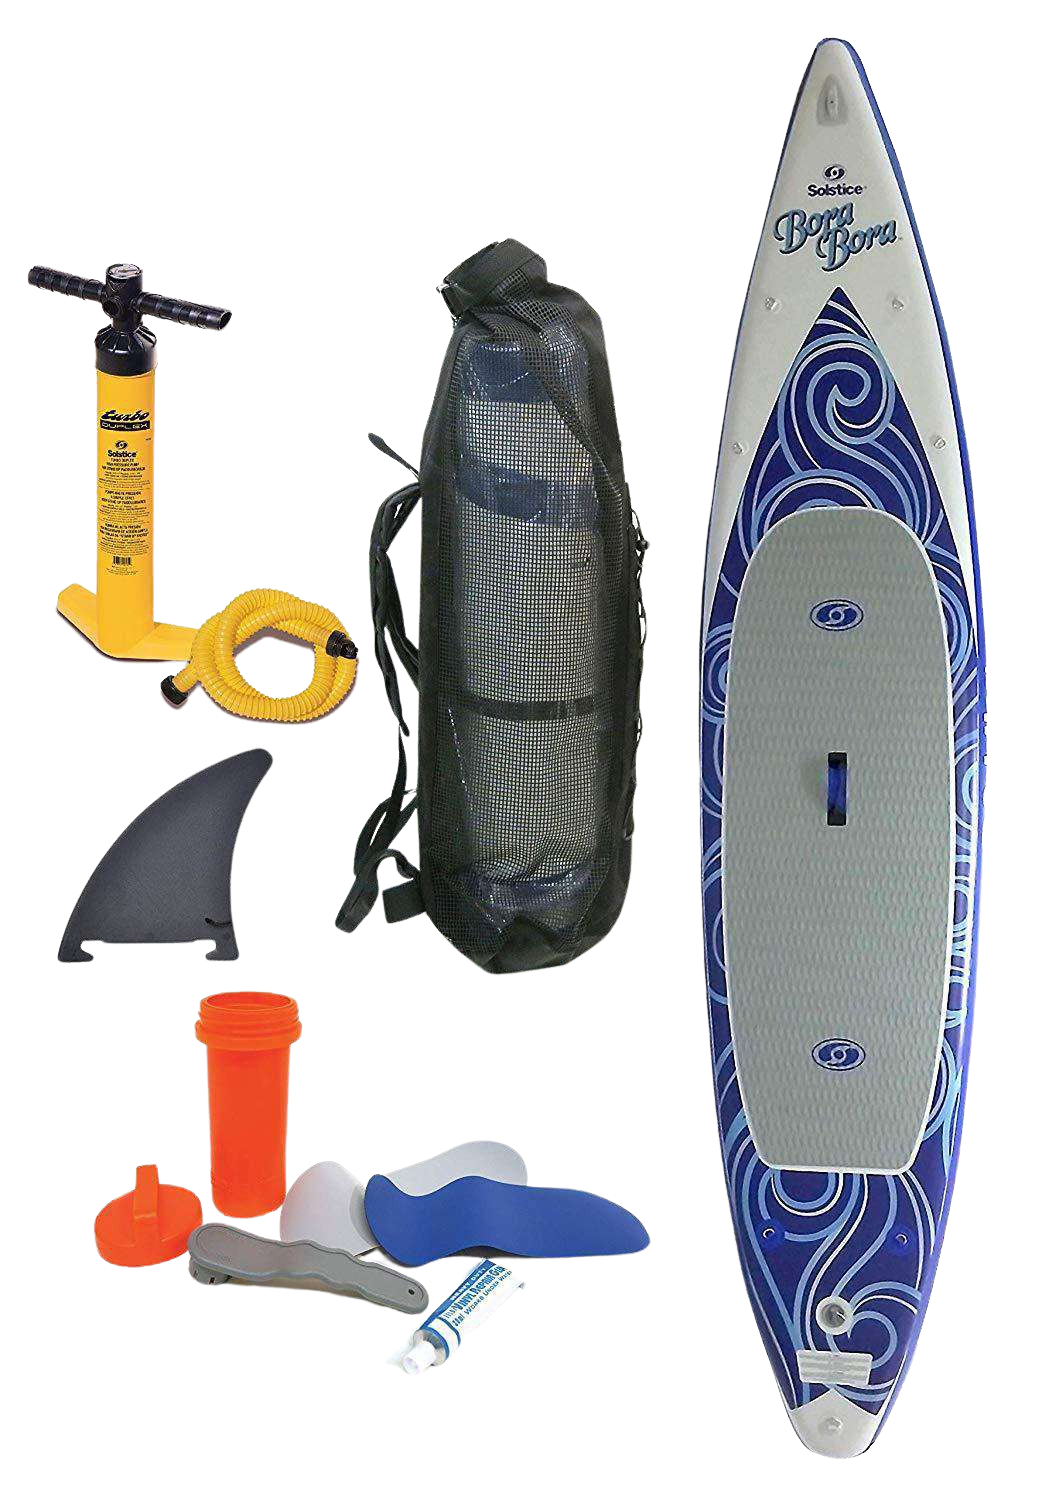 Swimline Solstice 35150 Bora Bora 12' 6" Inflatable Stand Up Paddleboard New